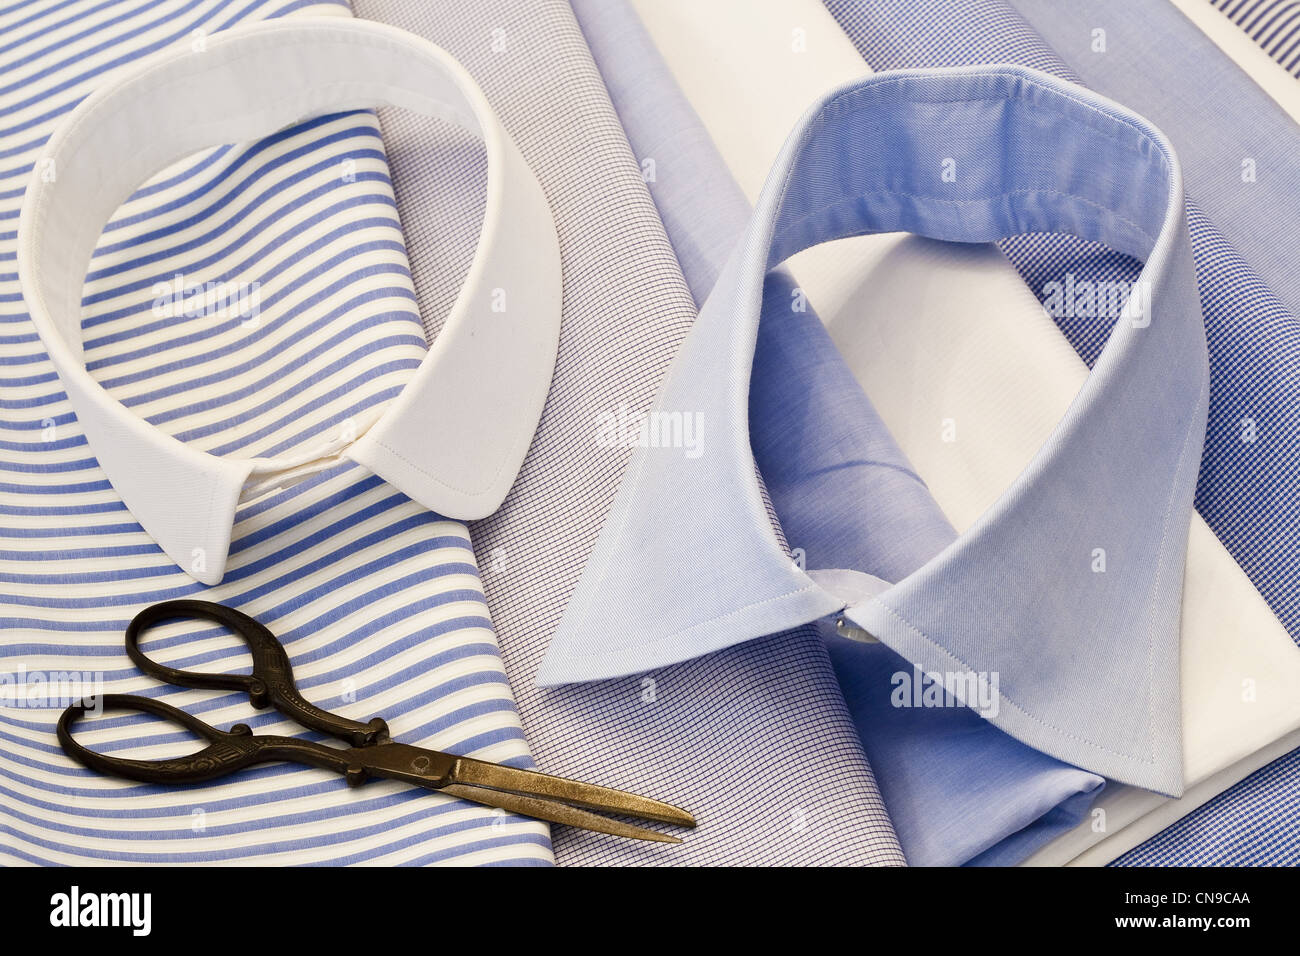 Italien, Kampanien, Neapel, Viale Gramsci, Camiceria Anna Matuozzo, ein 30-Year-Old-Shop, spezialisiert auf maßgeschneiderte Hemden und Krawatten Stockfoto